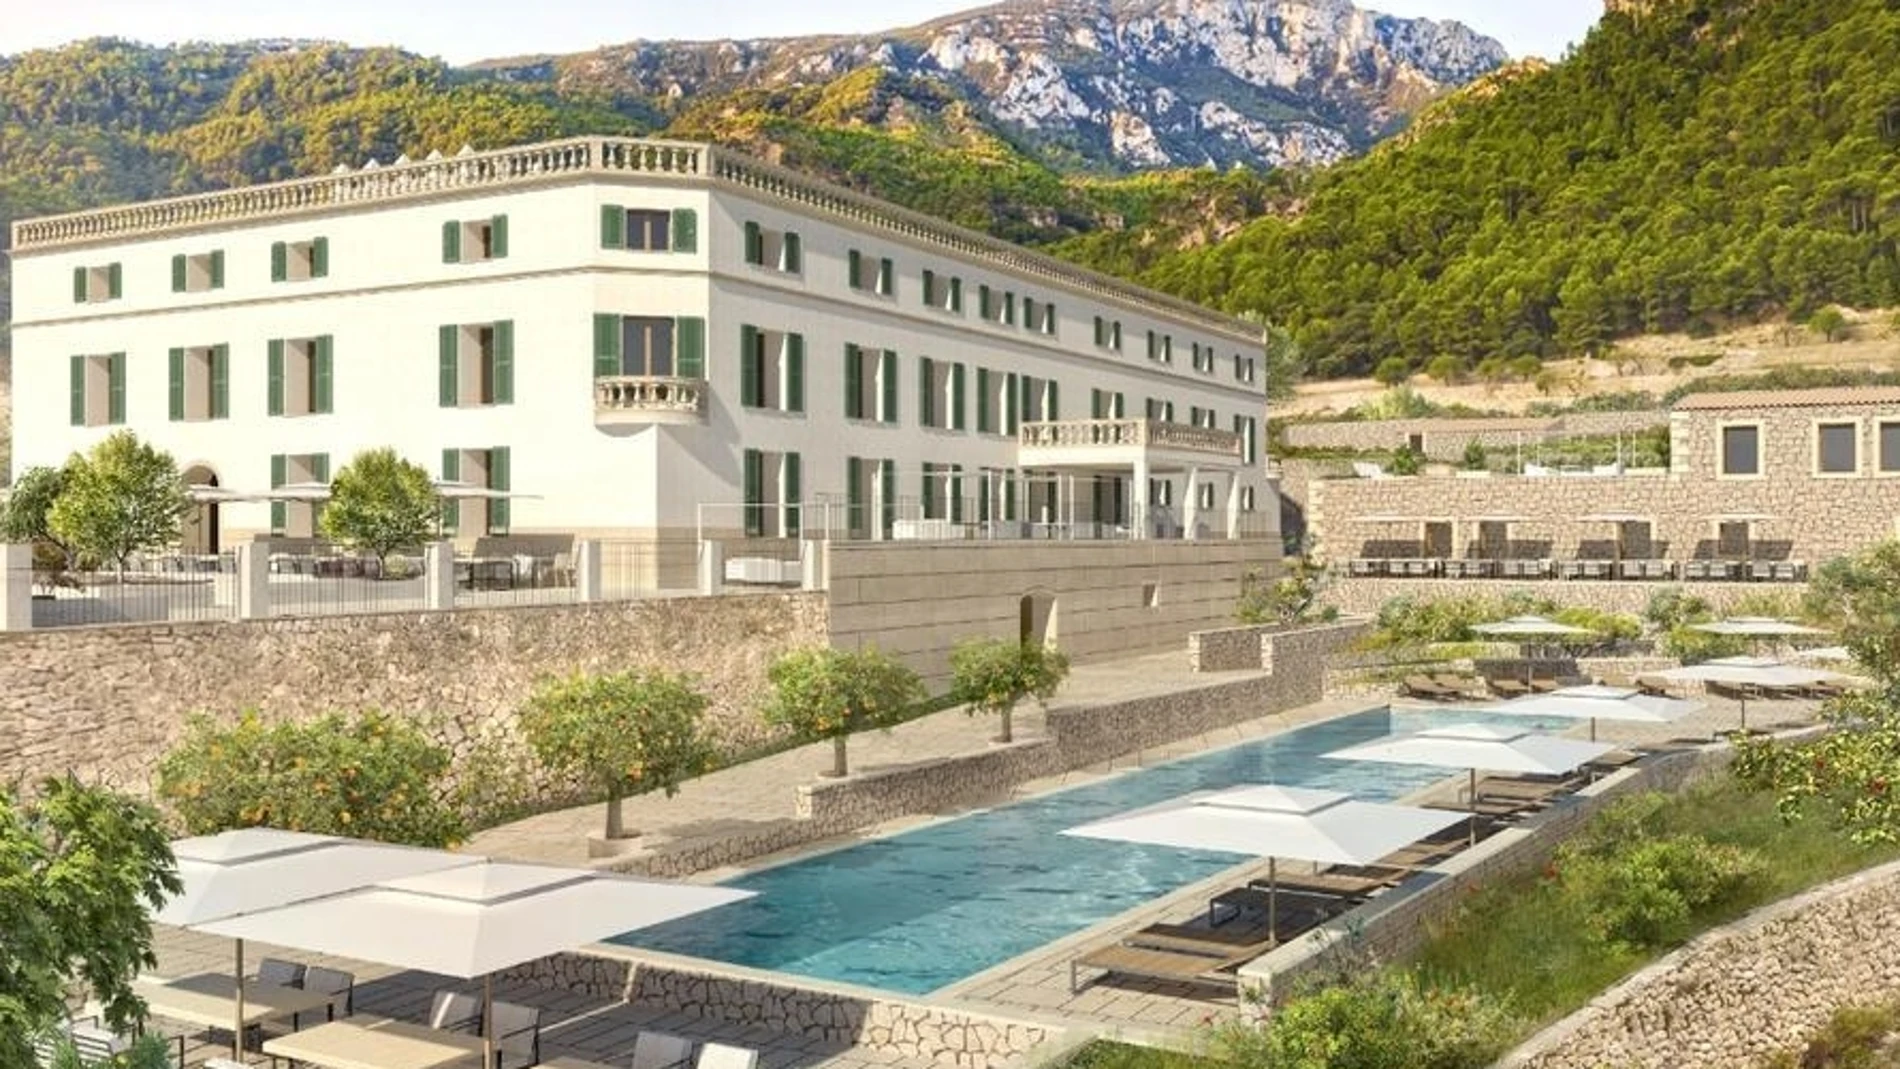 Recreación del hotel de Branson en Mallorca.